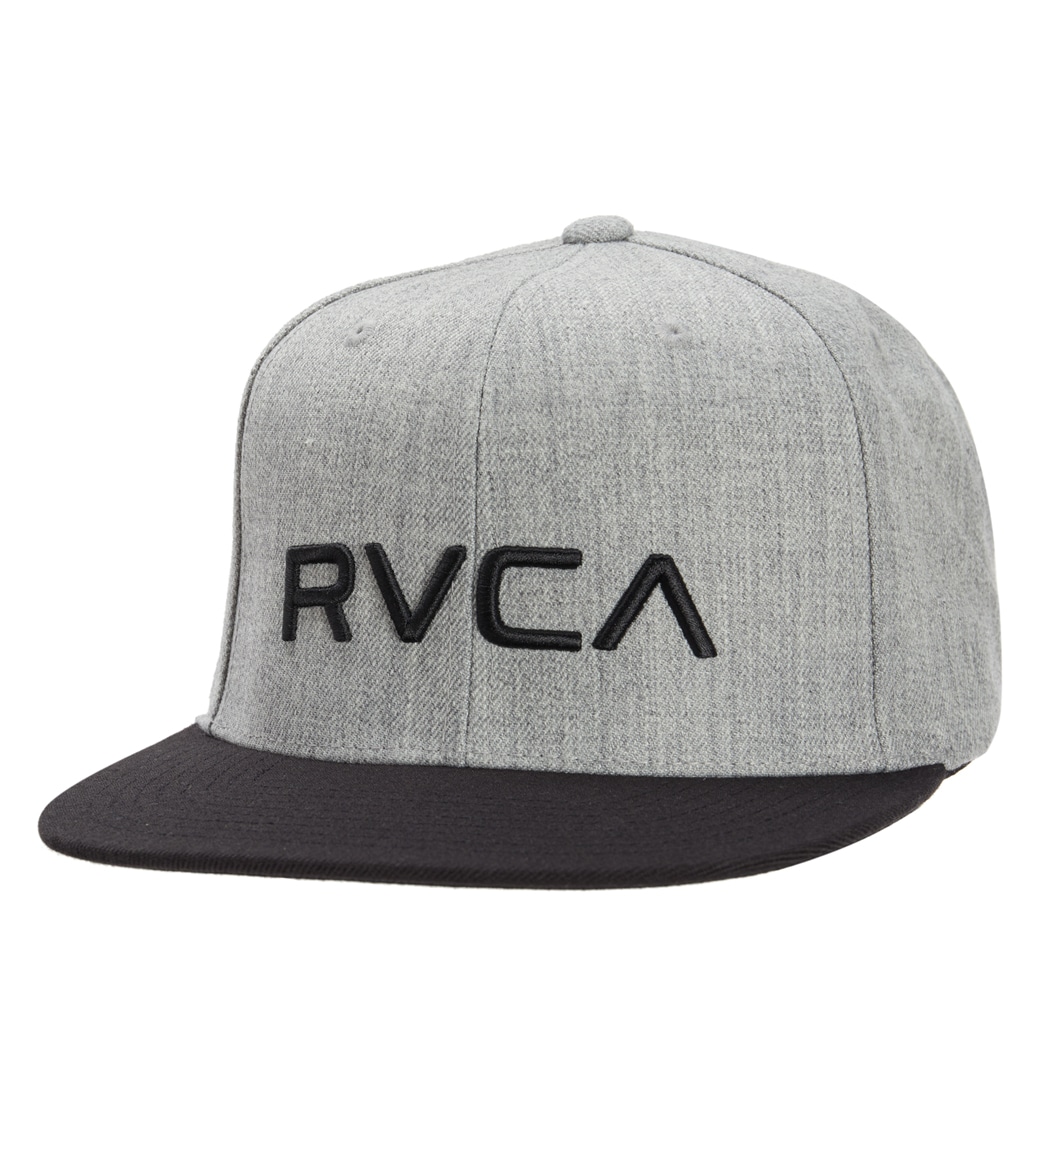 Rvca Men's Twill Snapback Hat - Heather Grey/Black Acrylic/Wool - Swimoutlet.com